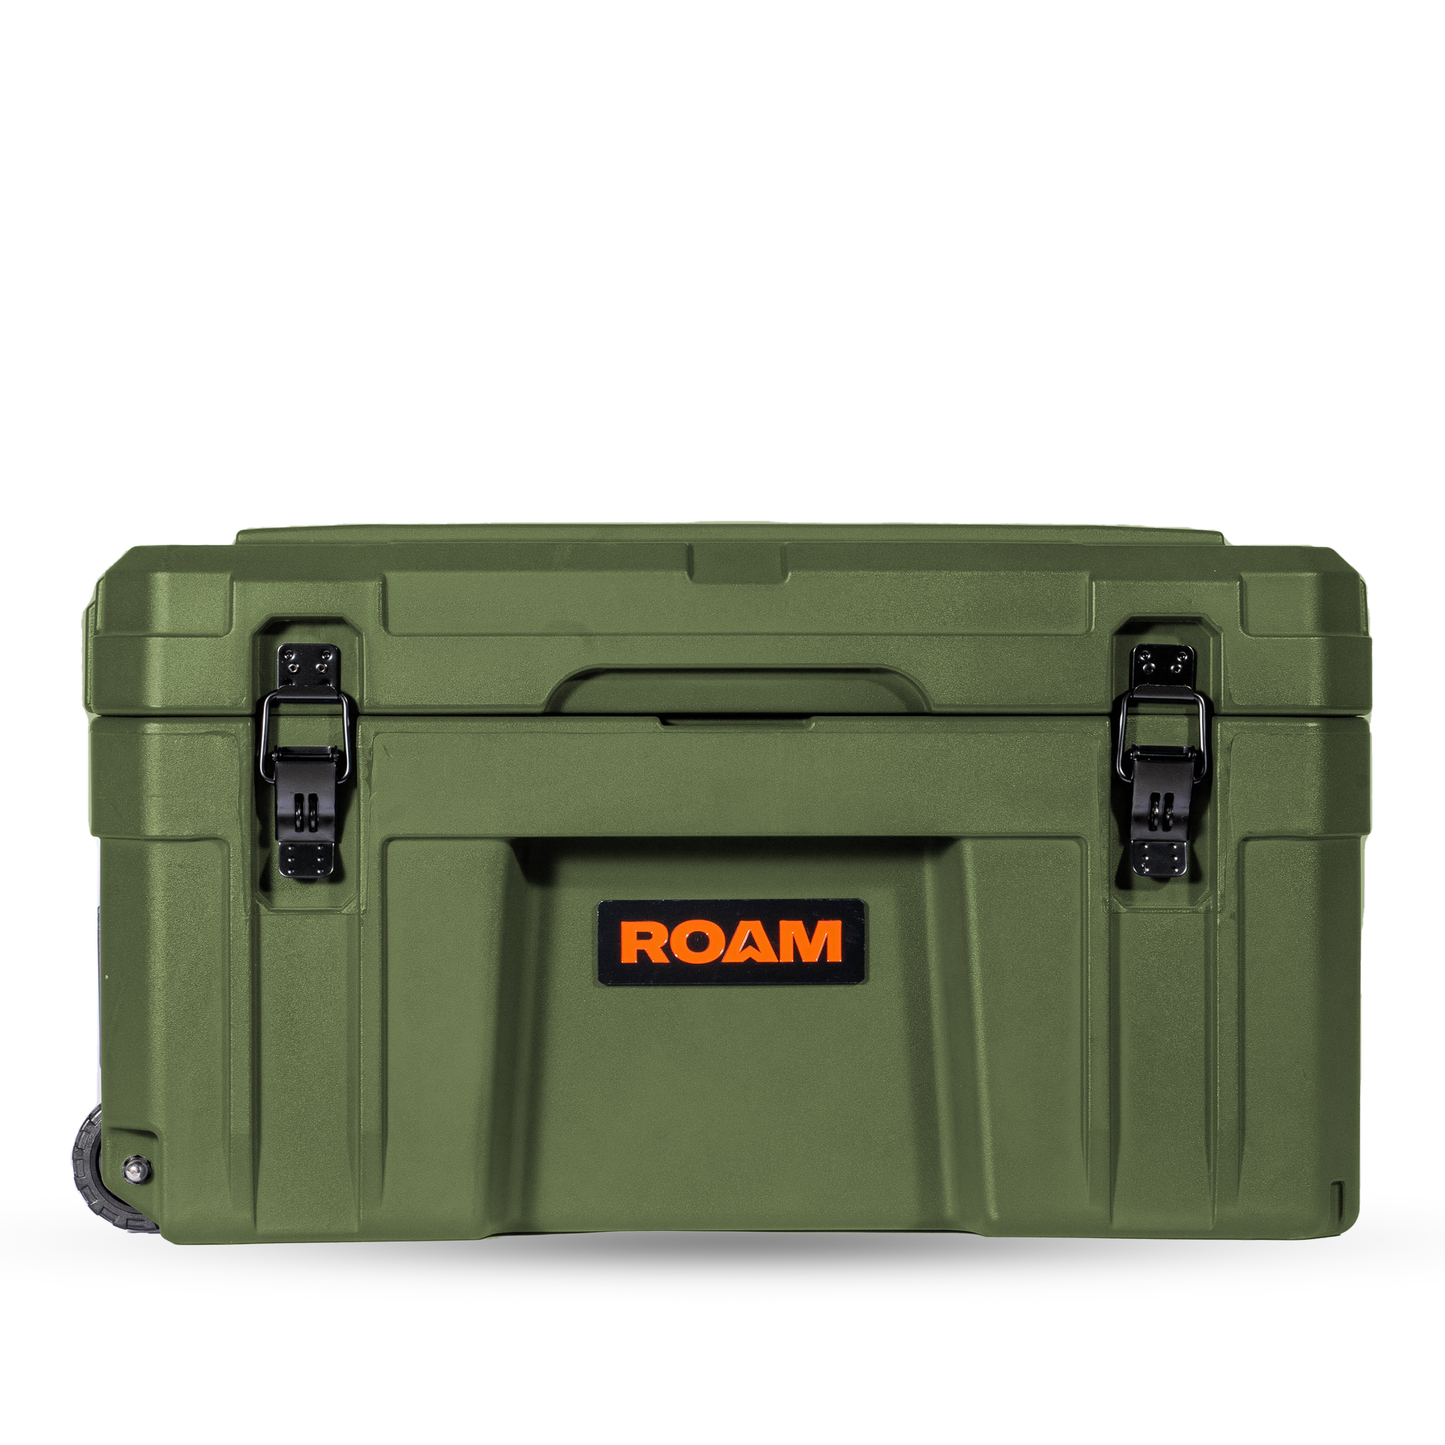 80L Rolling Rugged Case by ROAM Adventure Co.